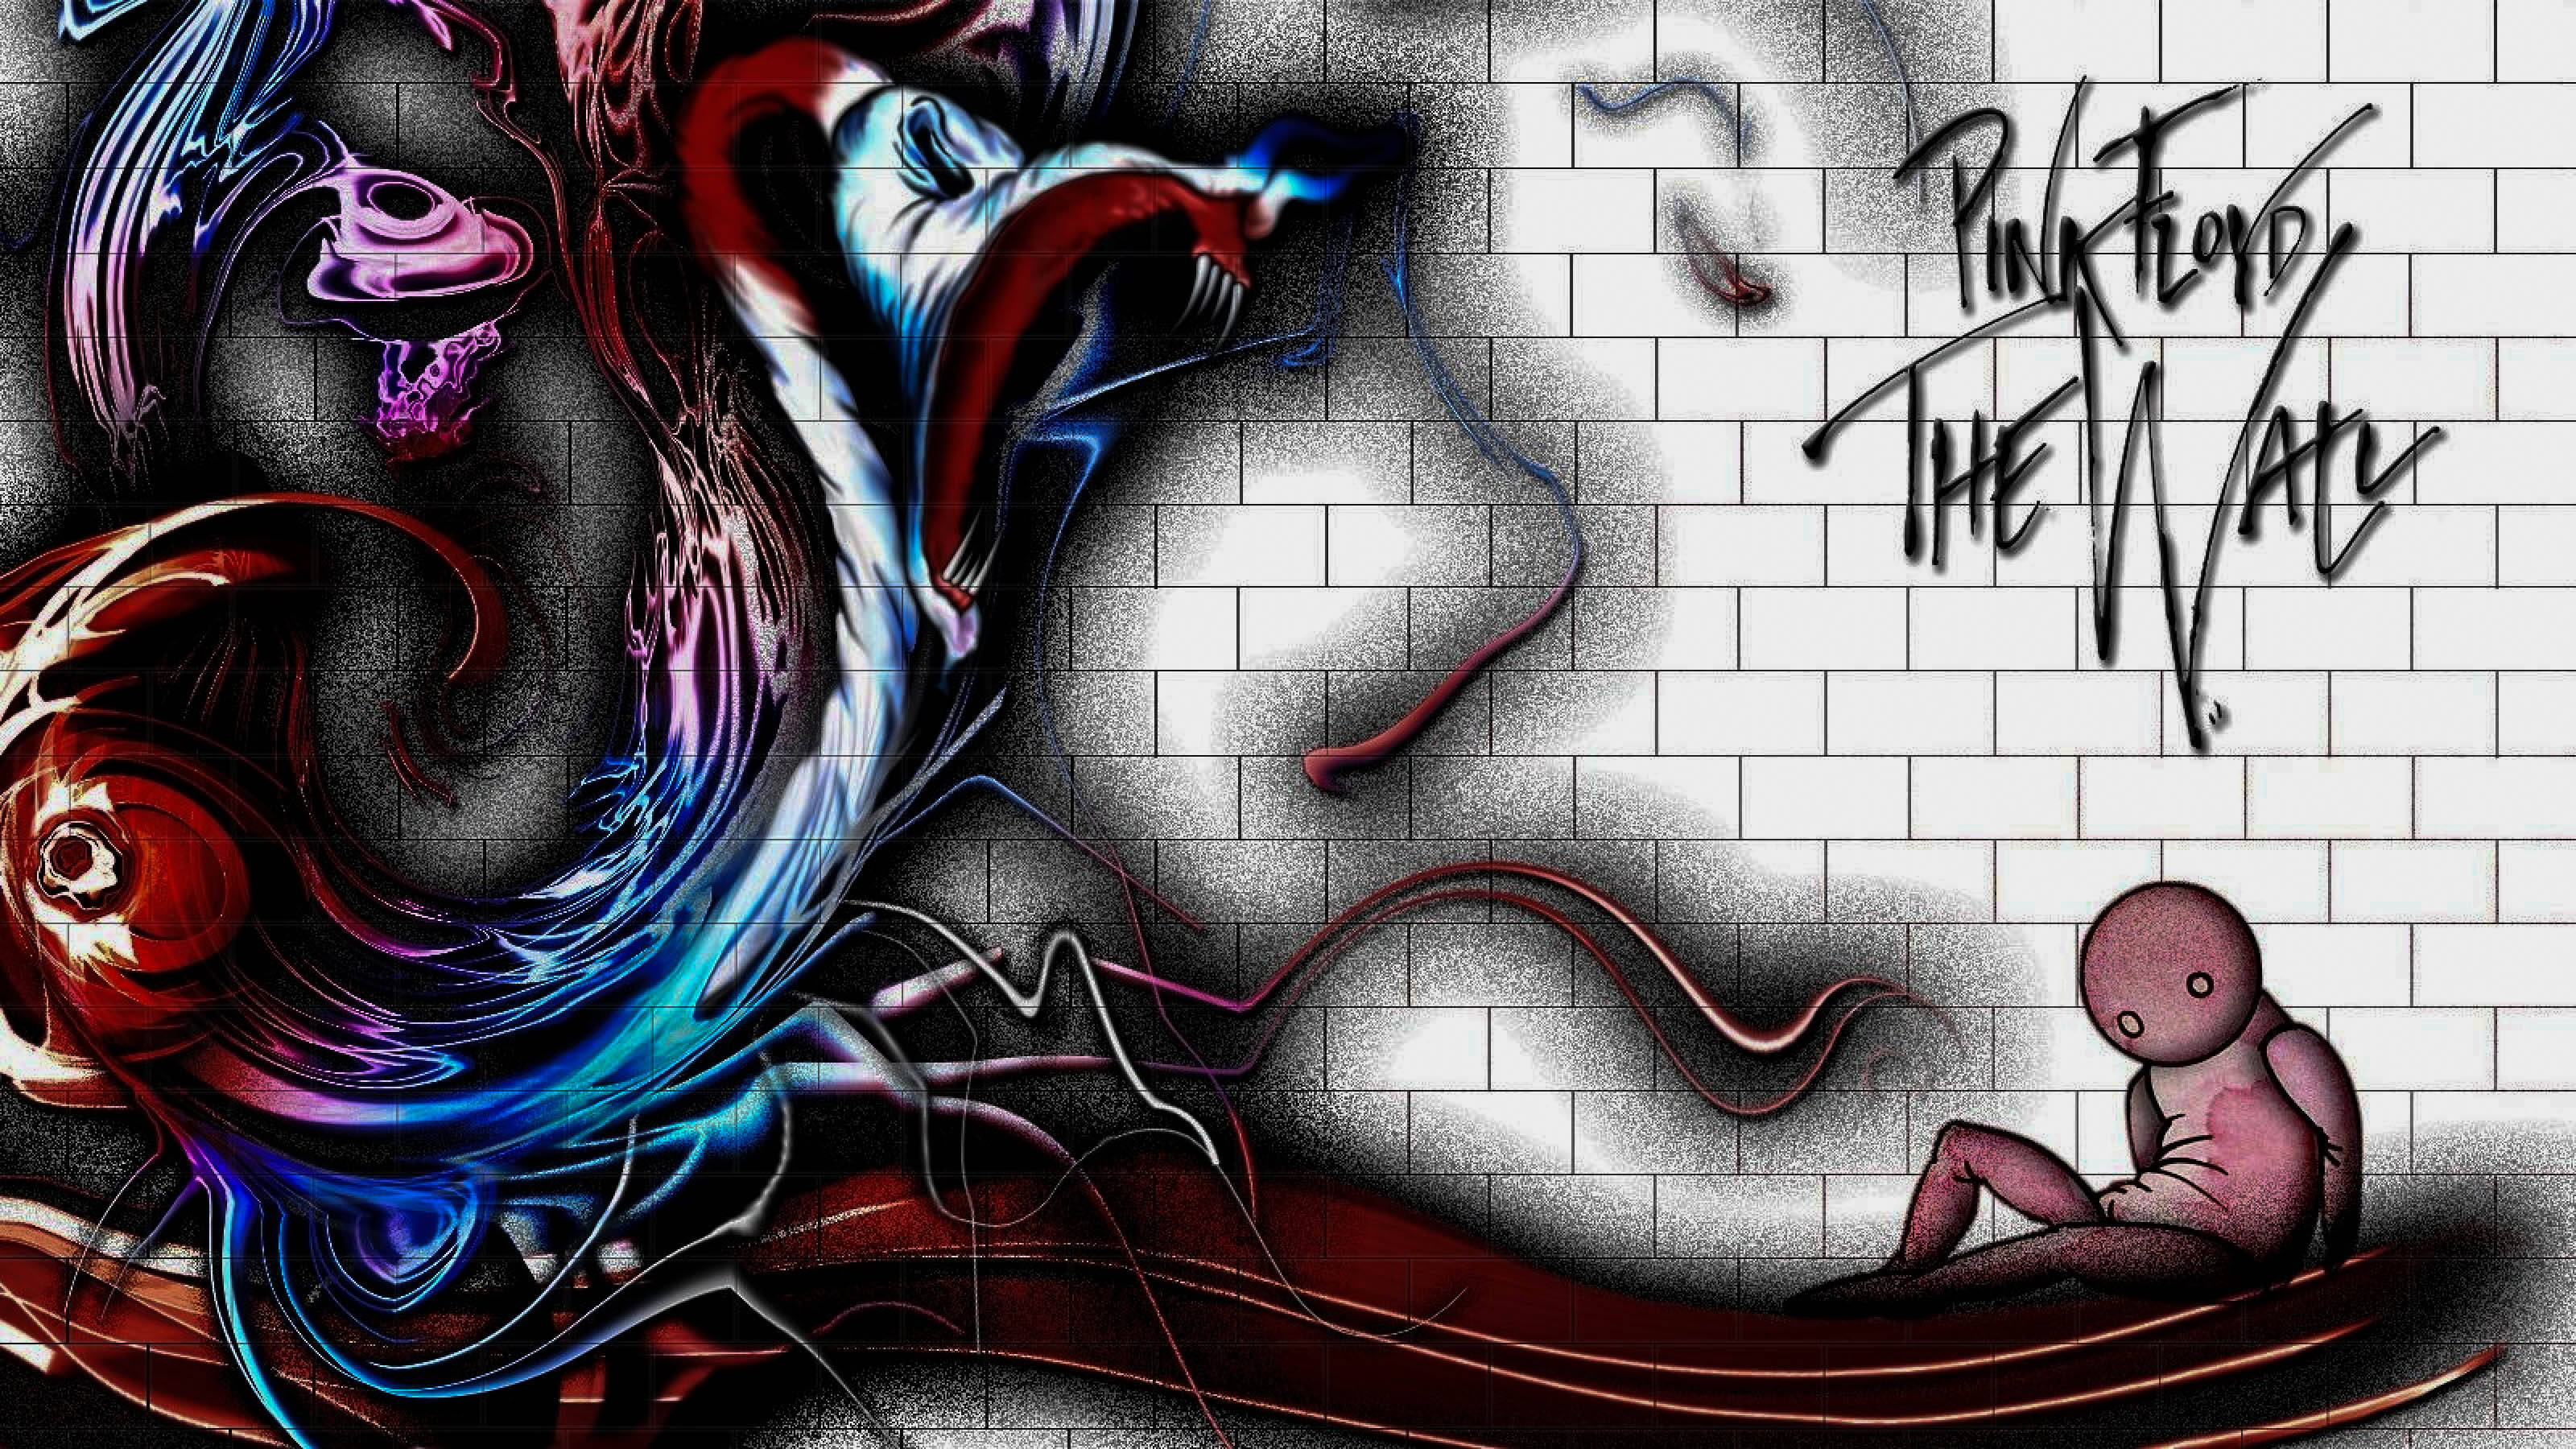 Graffiti Hintergrundbild 3200x1800. Download Pink Floyd 4k The Wall Graffiti Aesthetic Wallpaper